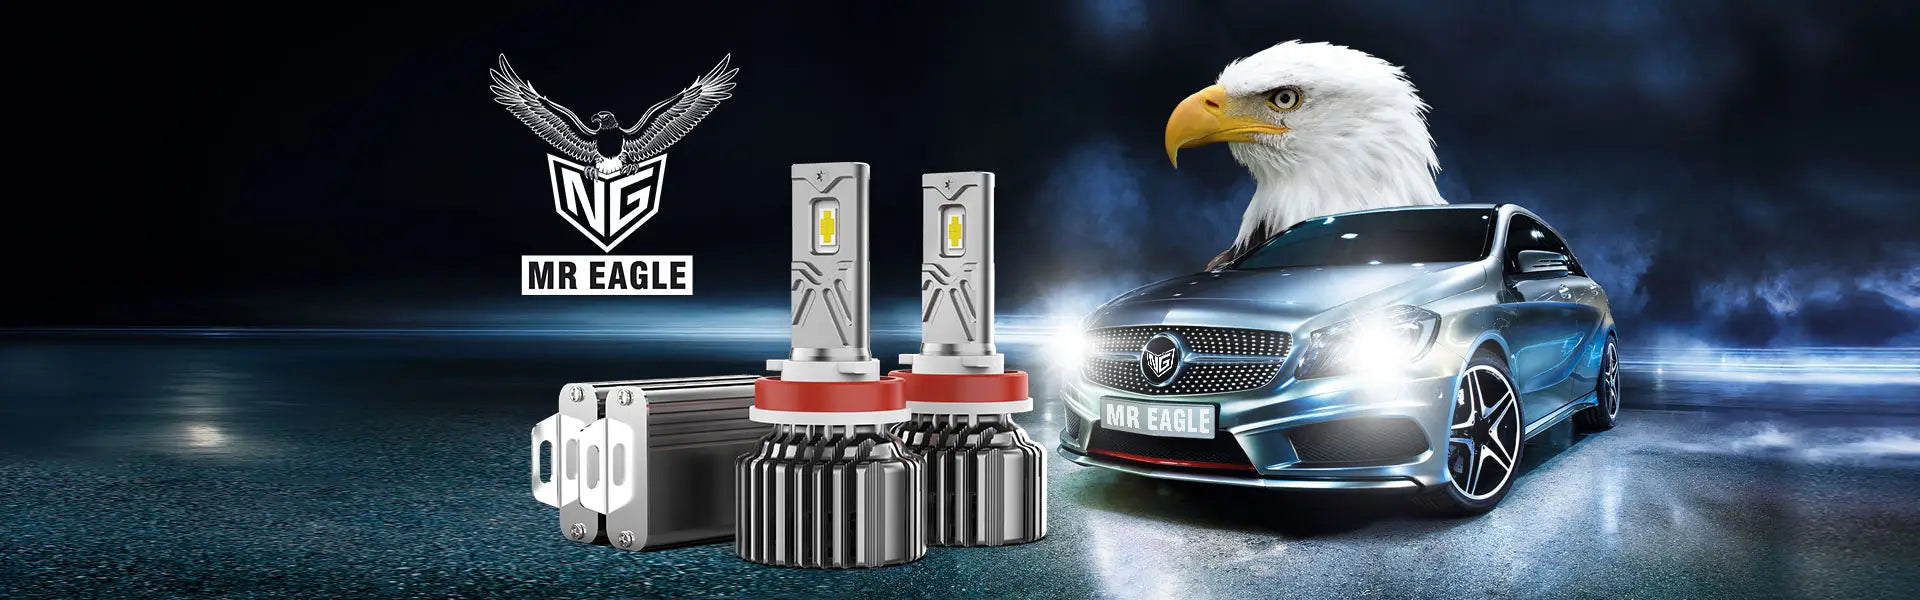 Best Automotive LED Headlight Bulb Brand – NAOEVO